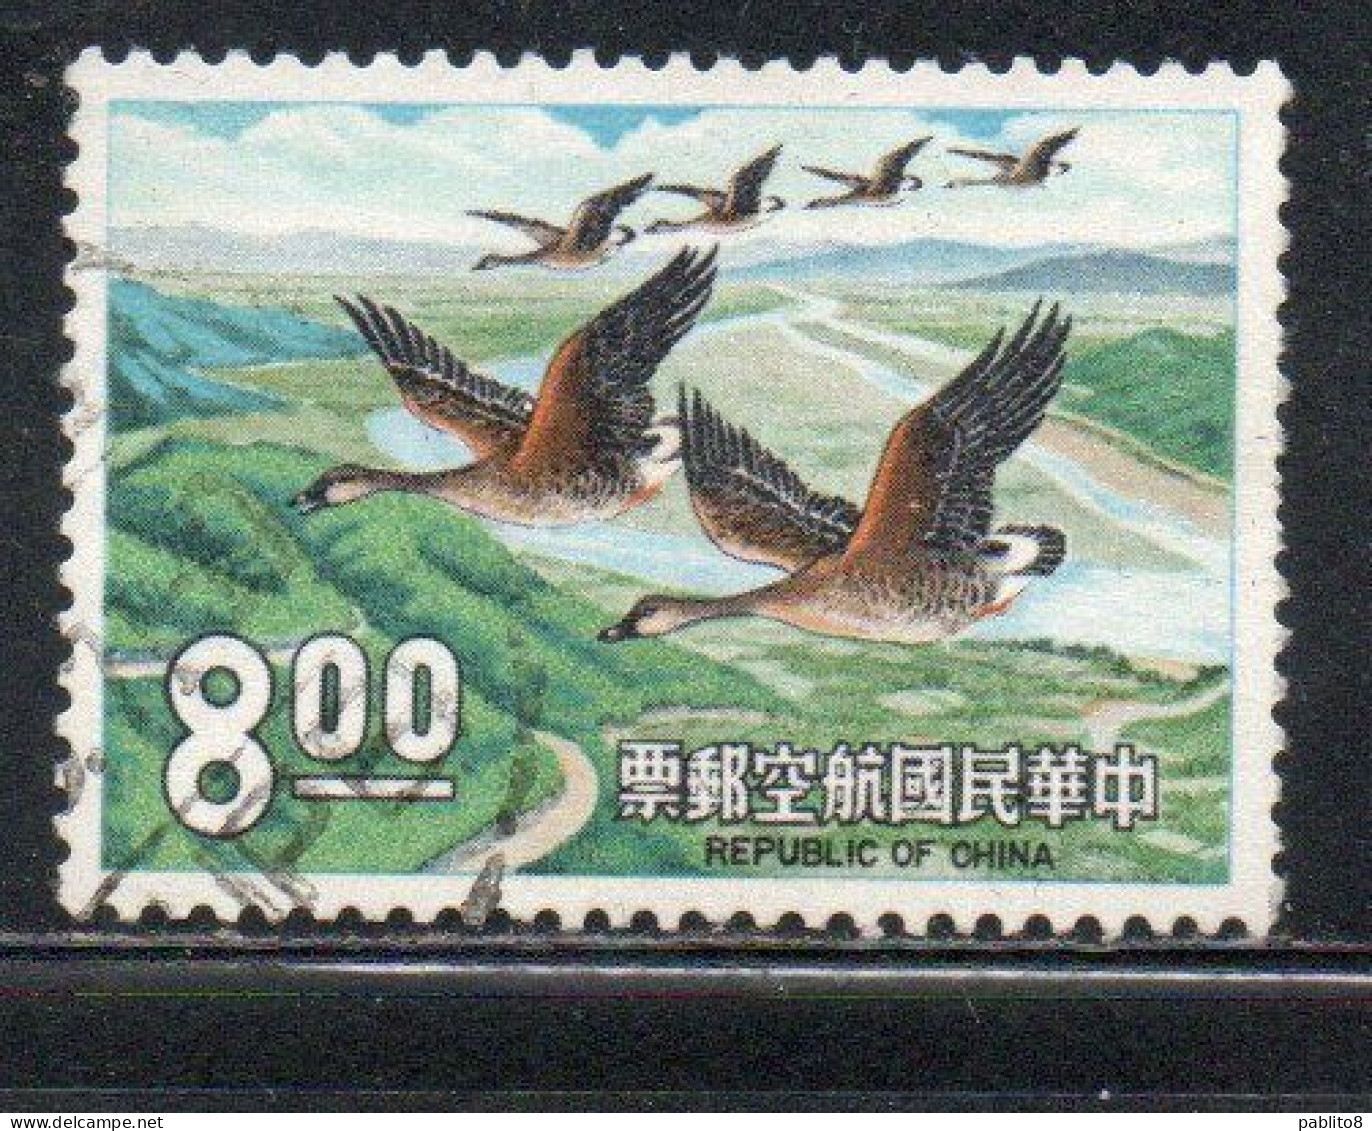 CHINA REPUBLIC CINA TAIWAN FORMOSA 1969 AIR POST MAIL AIRMAIL BIRD FAUNA BIRDS WILD GEESE FLIGT LAND 8$ USED USATO - Airmail